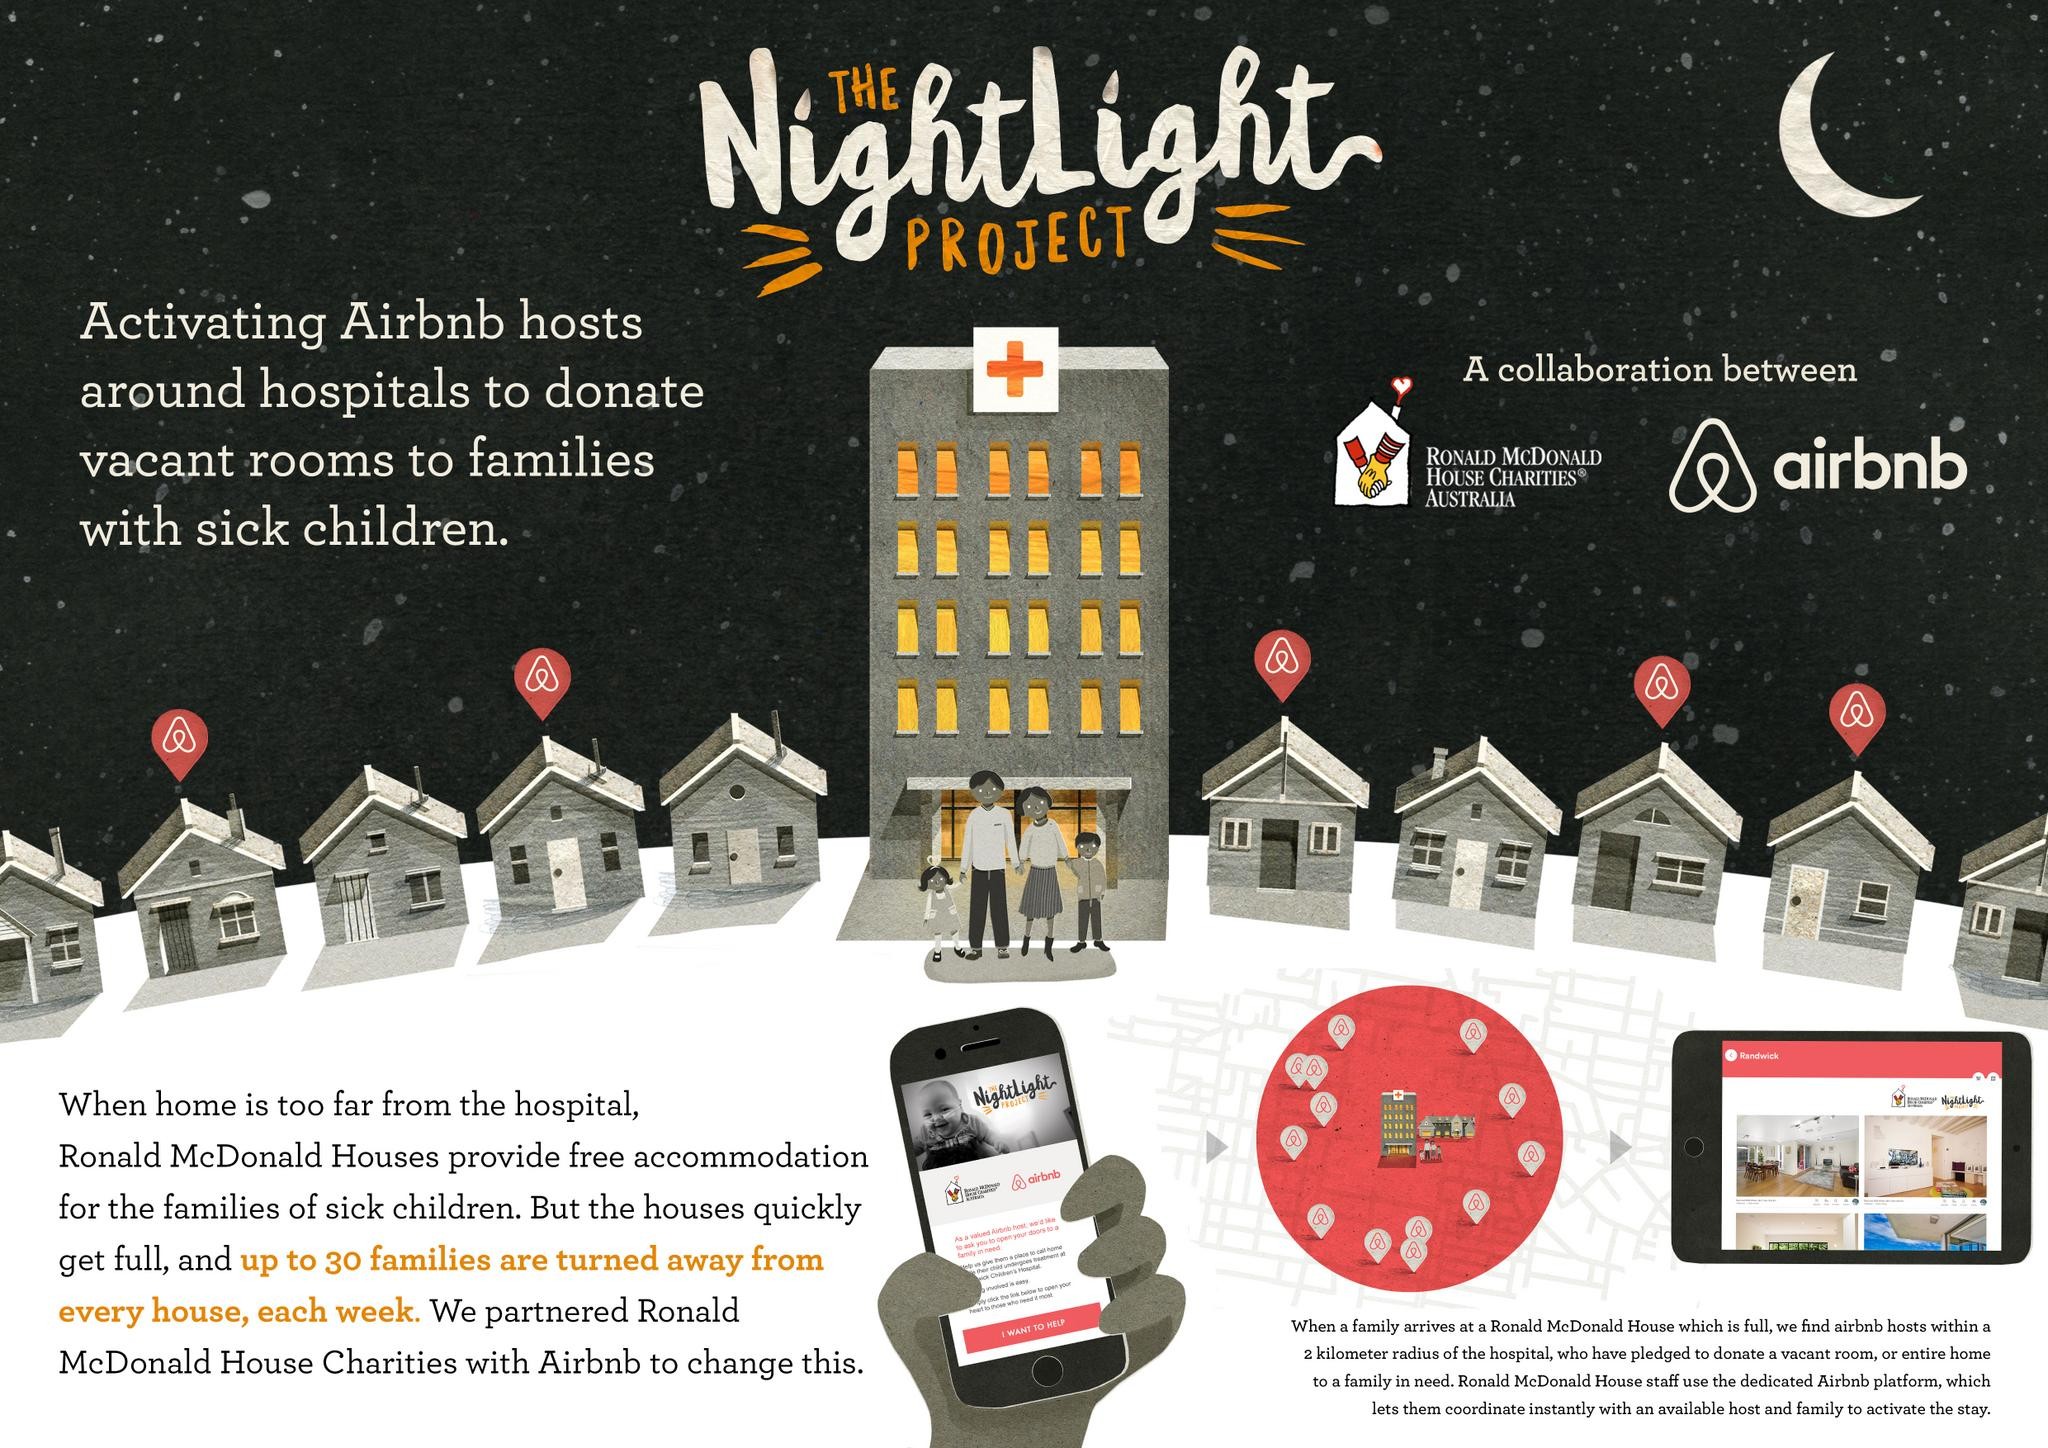 The Nightlight Project